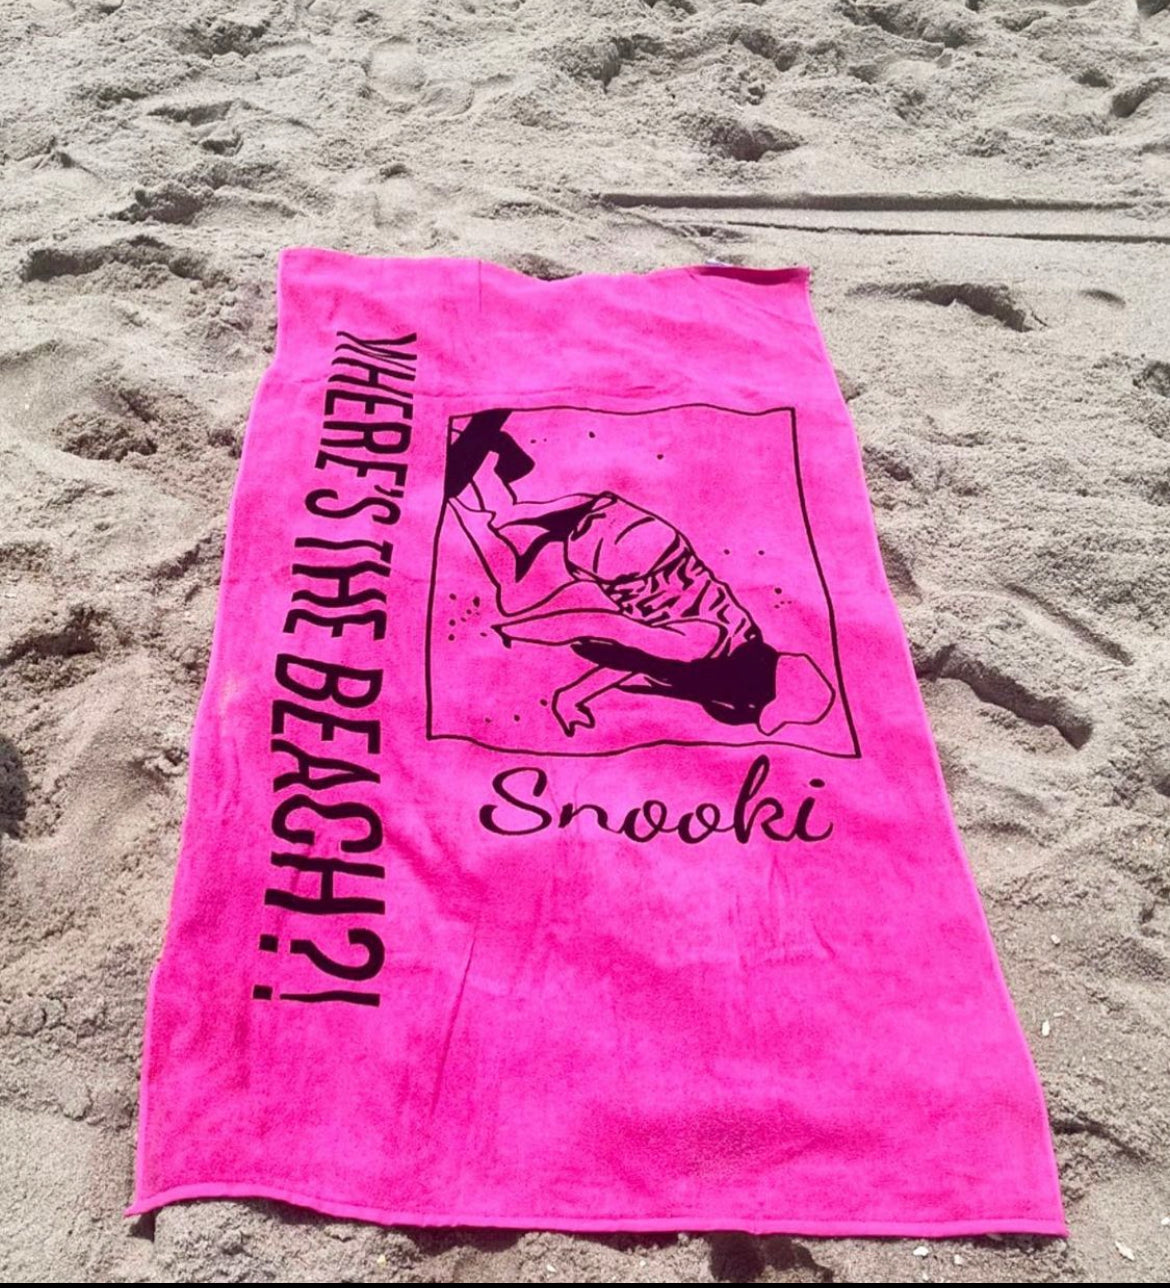 Where’s the beach towel